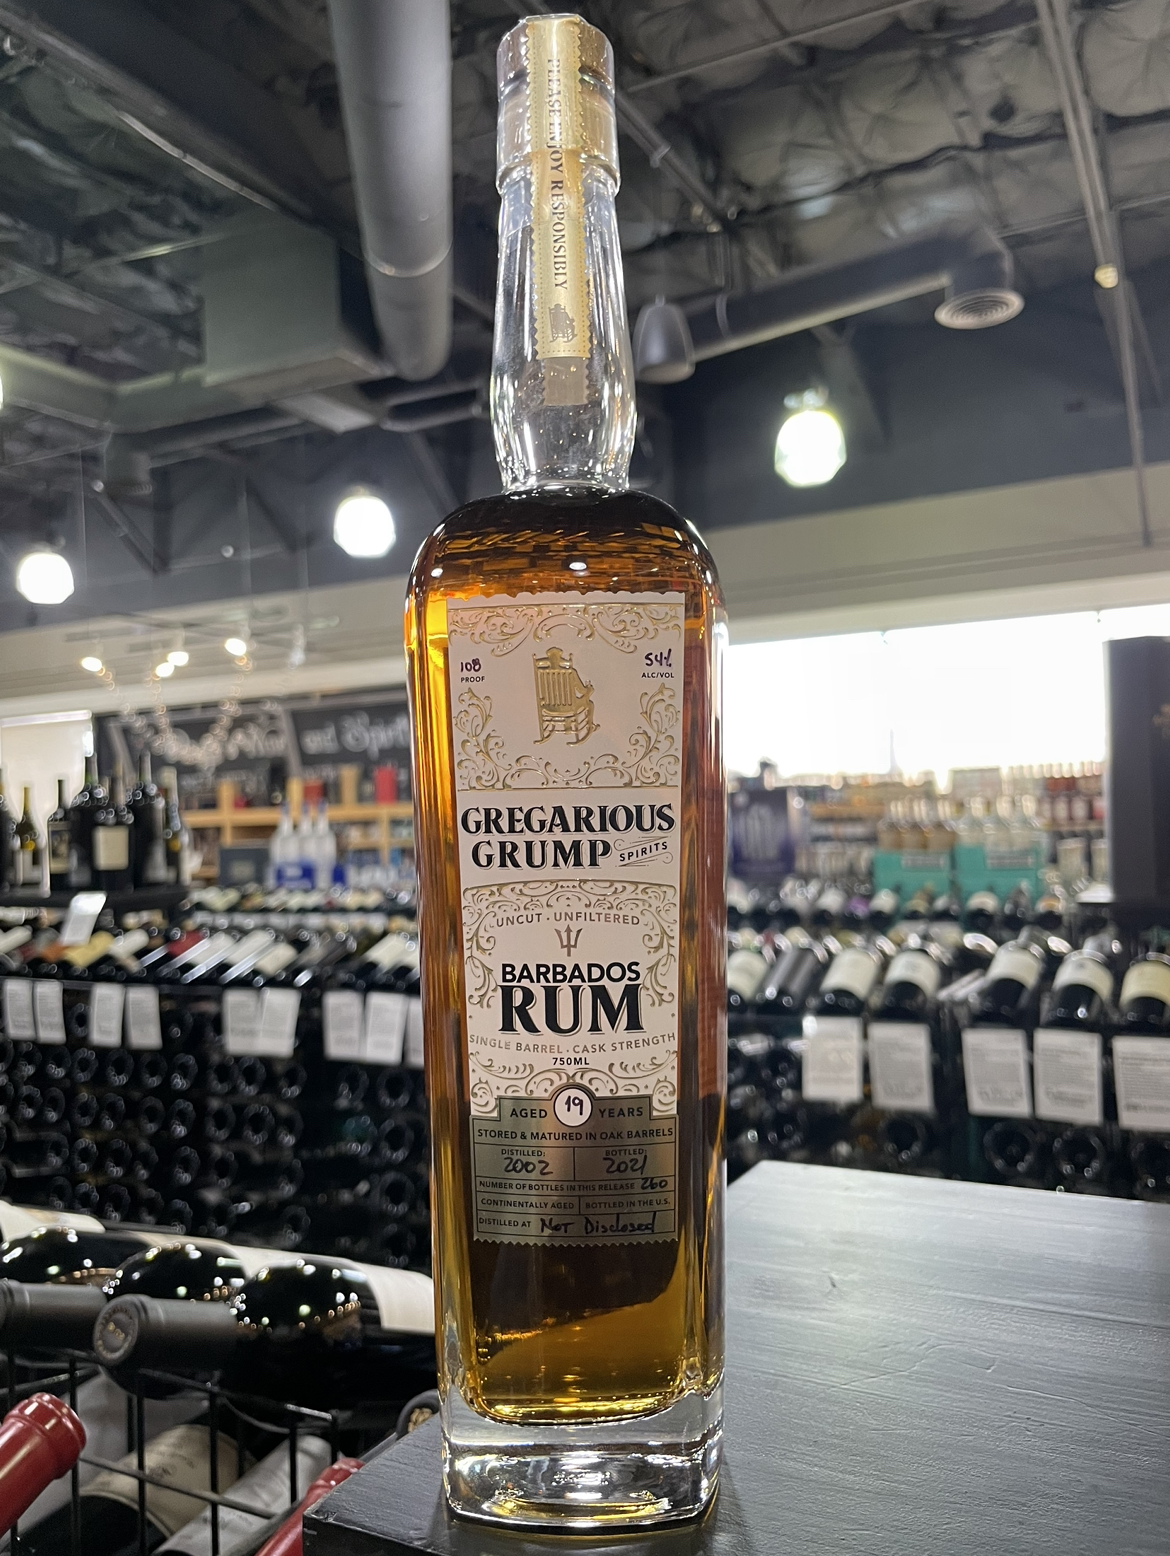 Gregarious Grump - 19 year Barbados Rum 2002 (750)